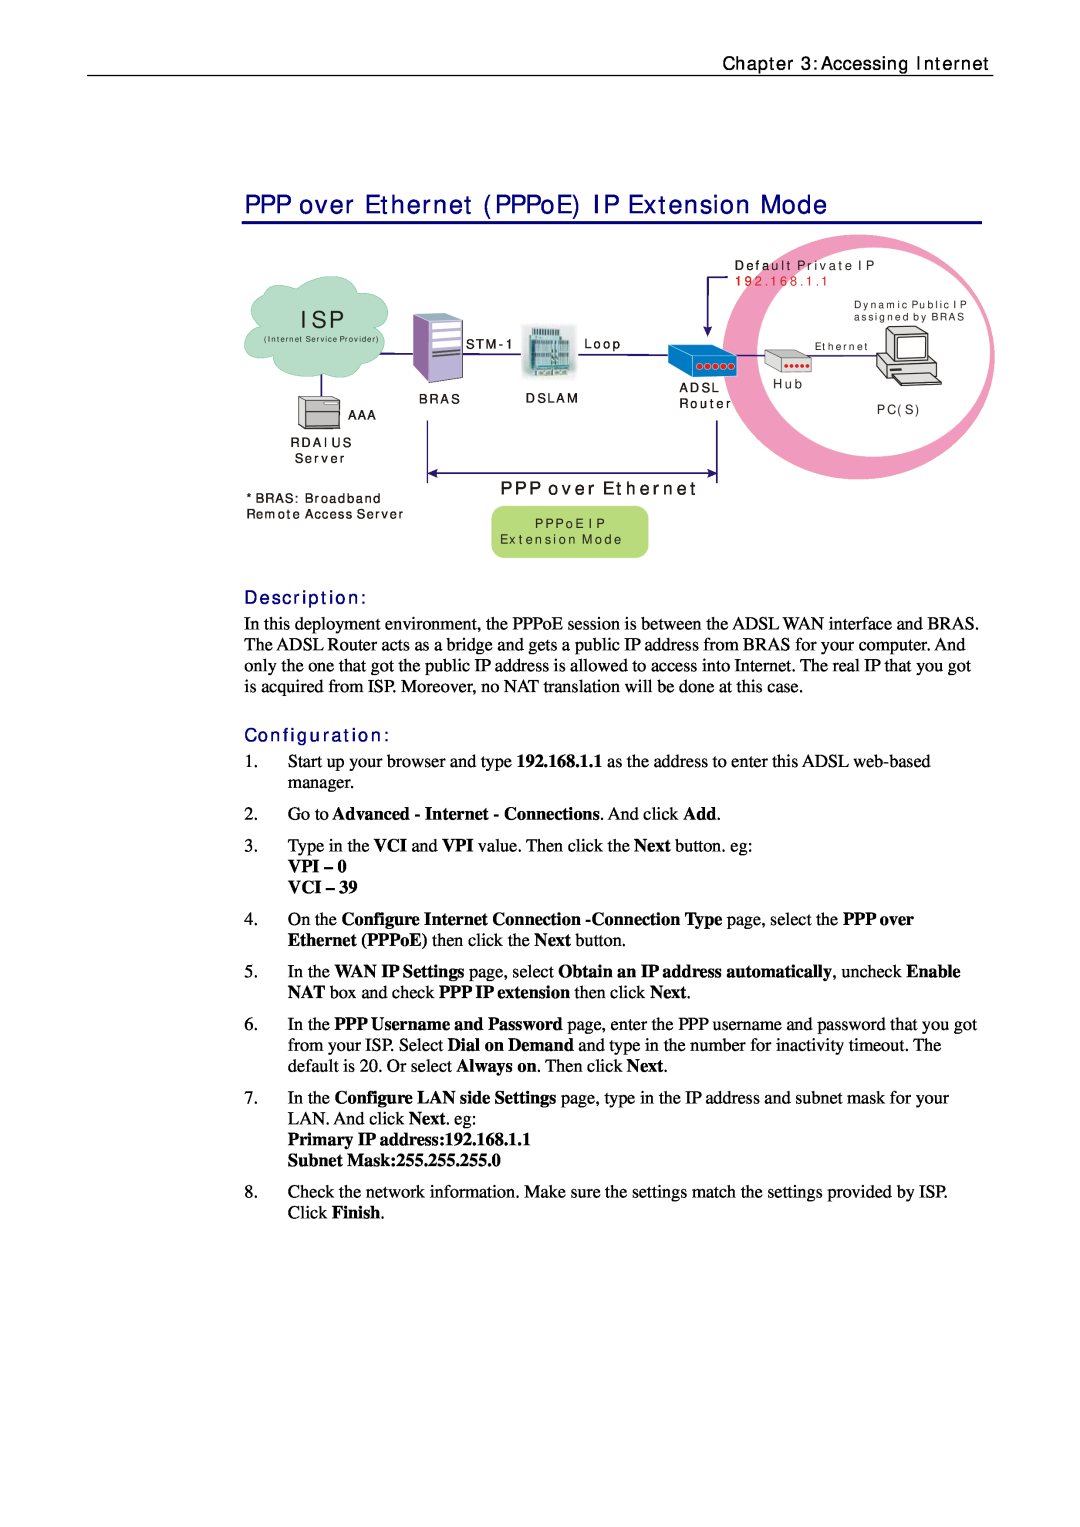 Siemens CL-010-I manual PPP over Ethernet PPPoE IP Extension Mode, Description, Configuration, VPI - 0 VCI 